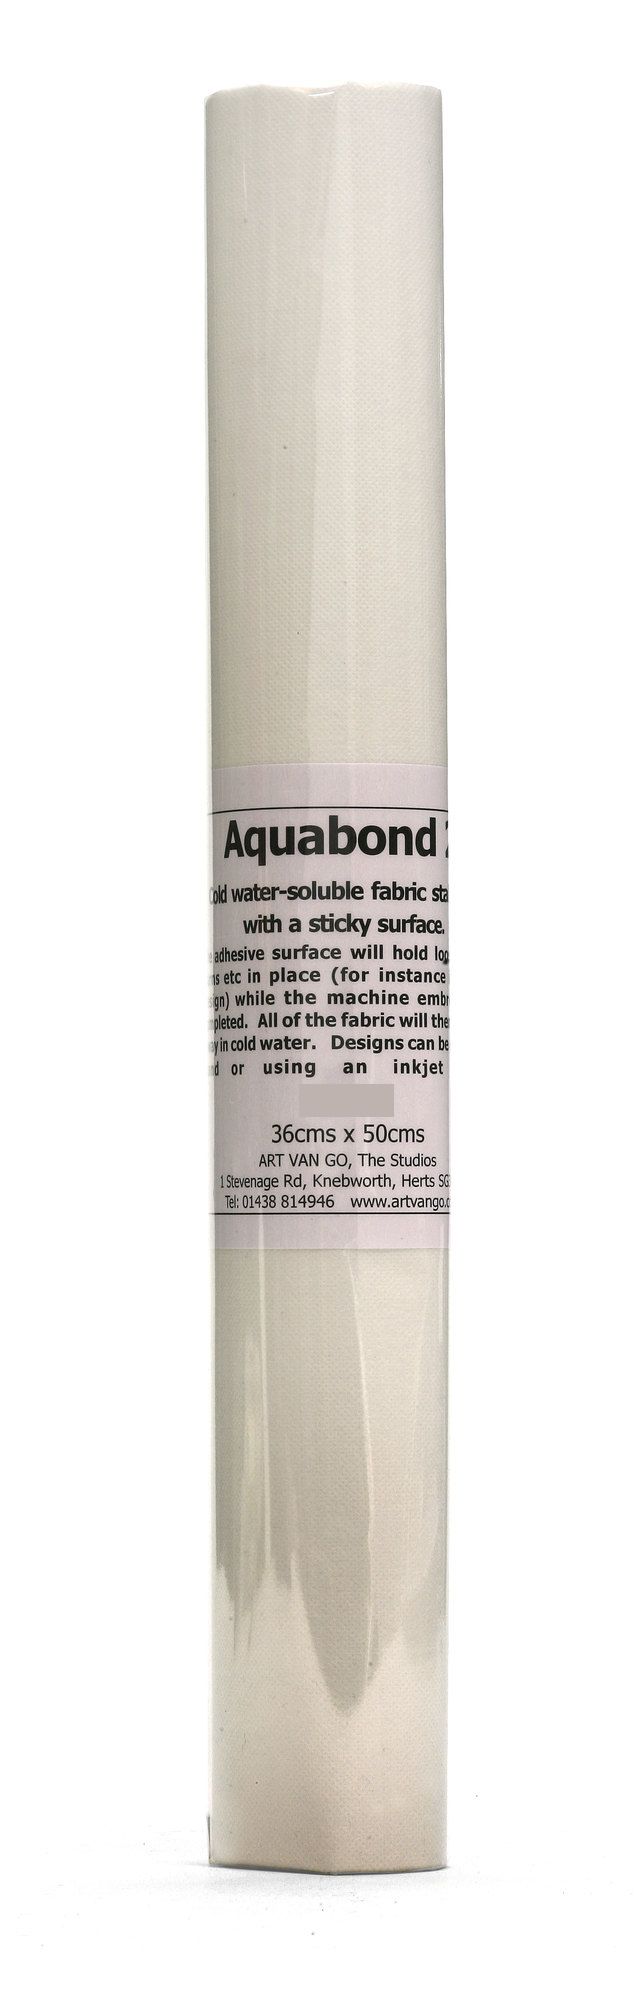 <!--002.4-->Aquabond 36 x 50cm